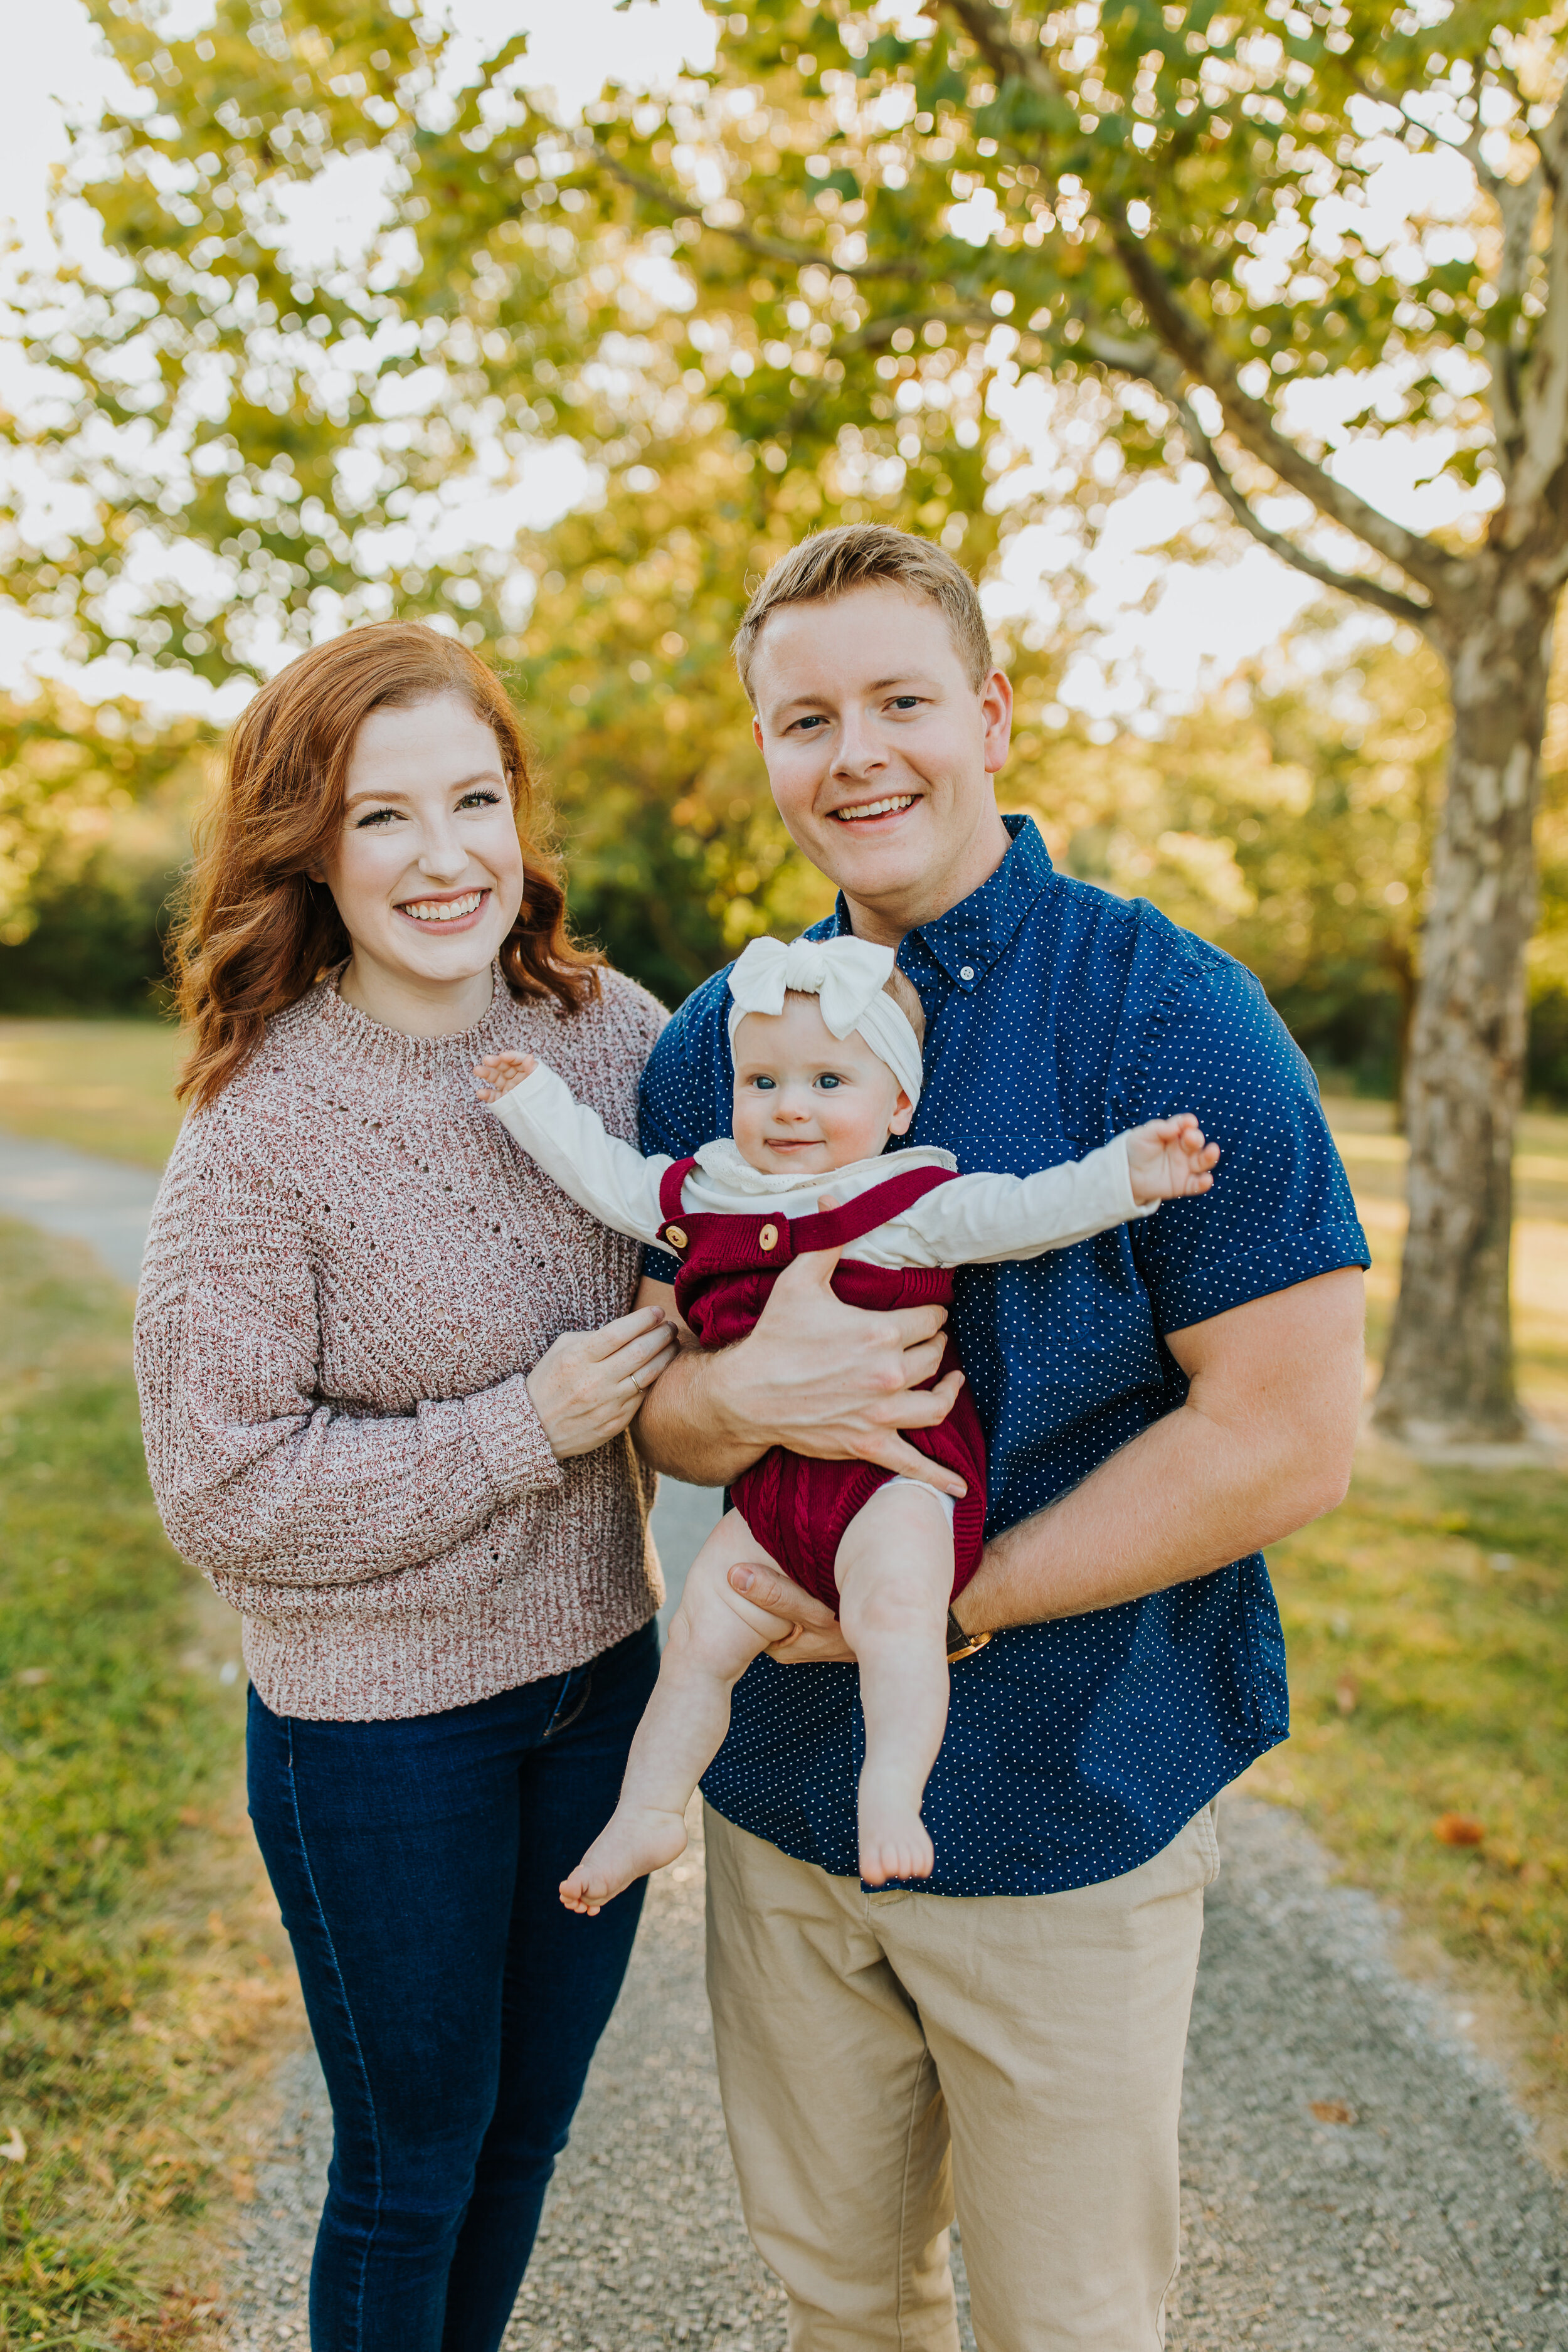 Unger Family Photos 2020 - Nathaniel Jensen Photography - Omaha Nebraska Family Photographer-55.jpg